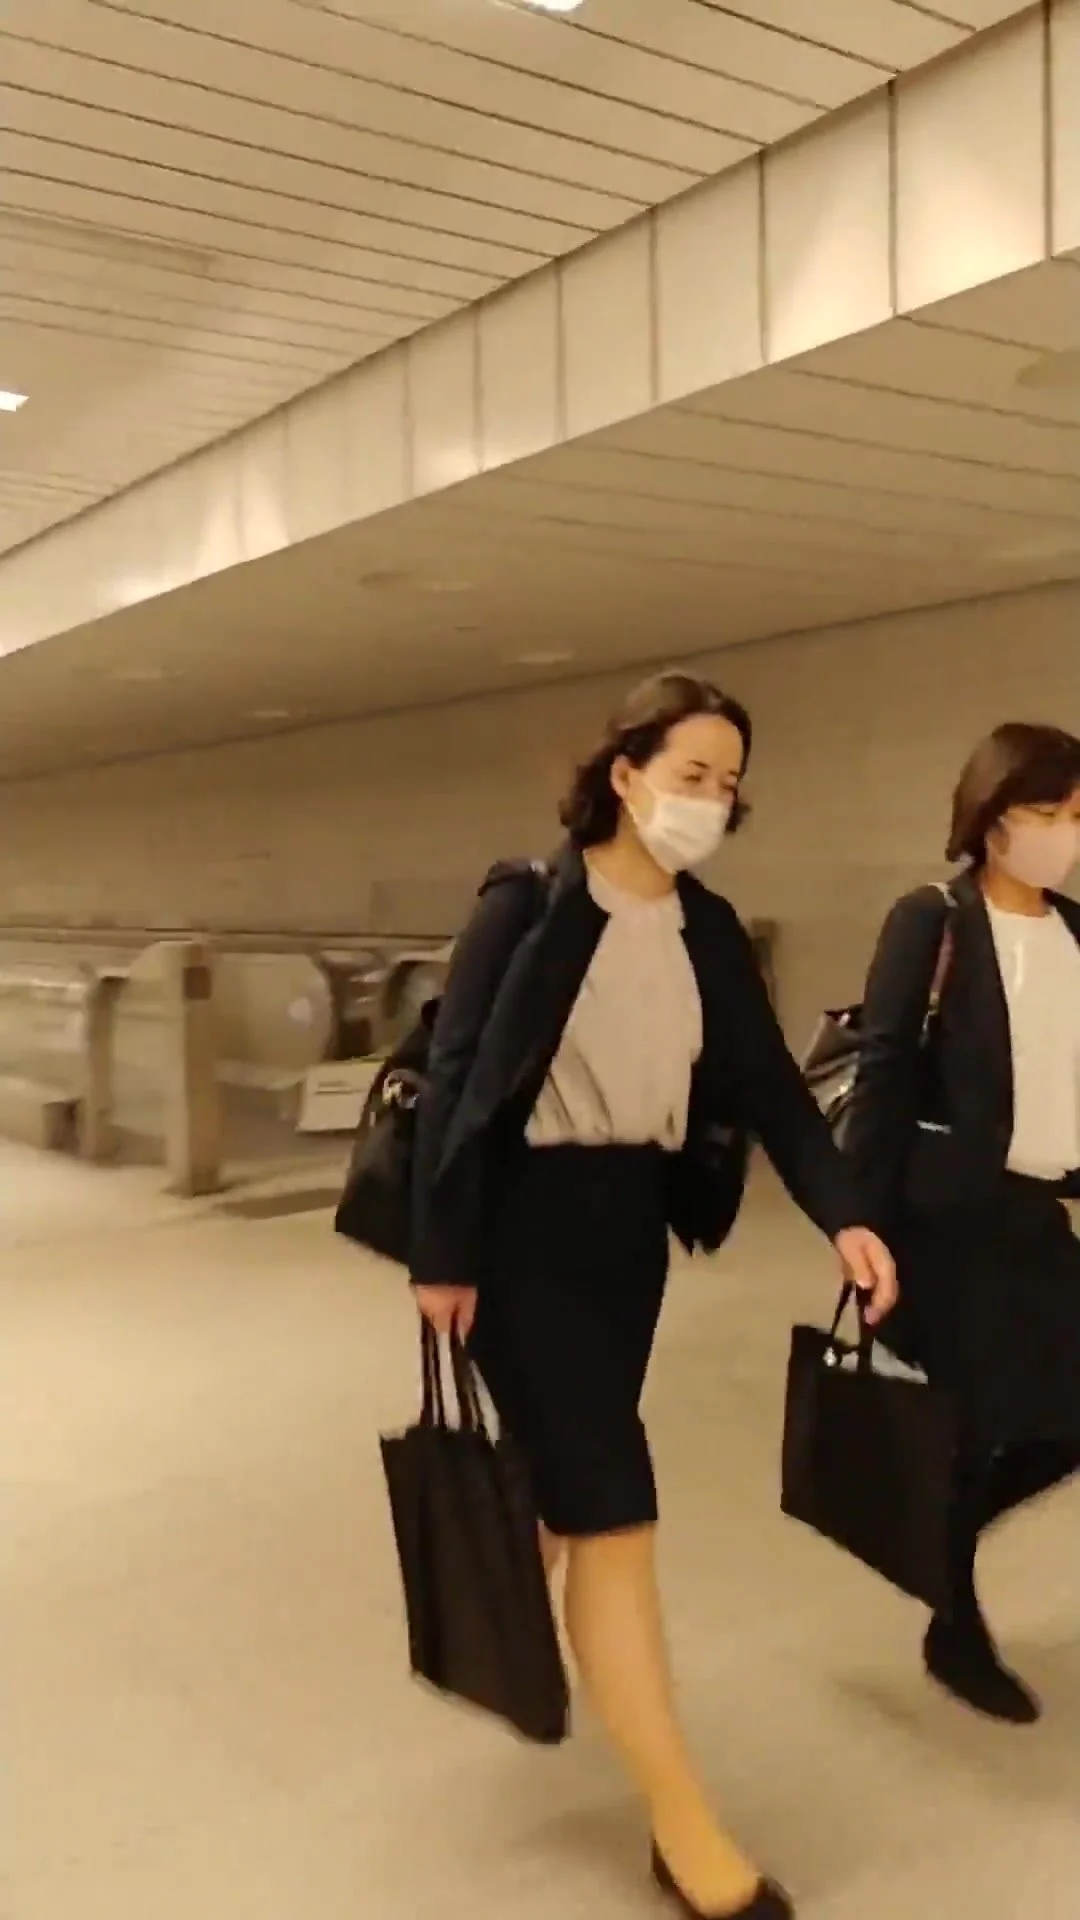 Glass Elevator Upskirt - Japanese Ladies Upskirt - video 49 - ThisVid.com